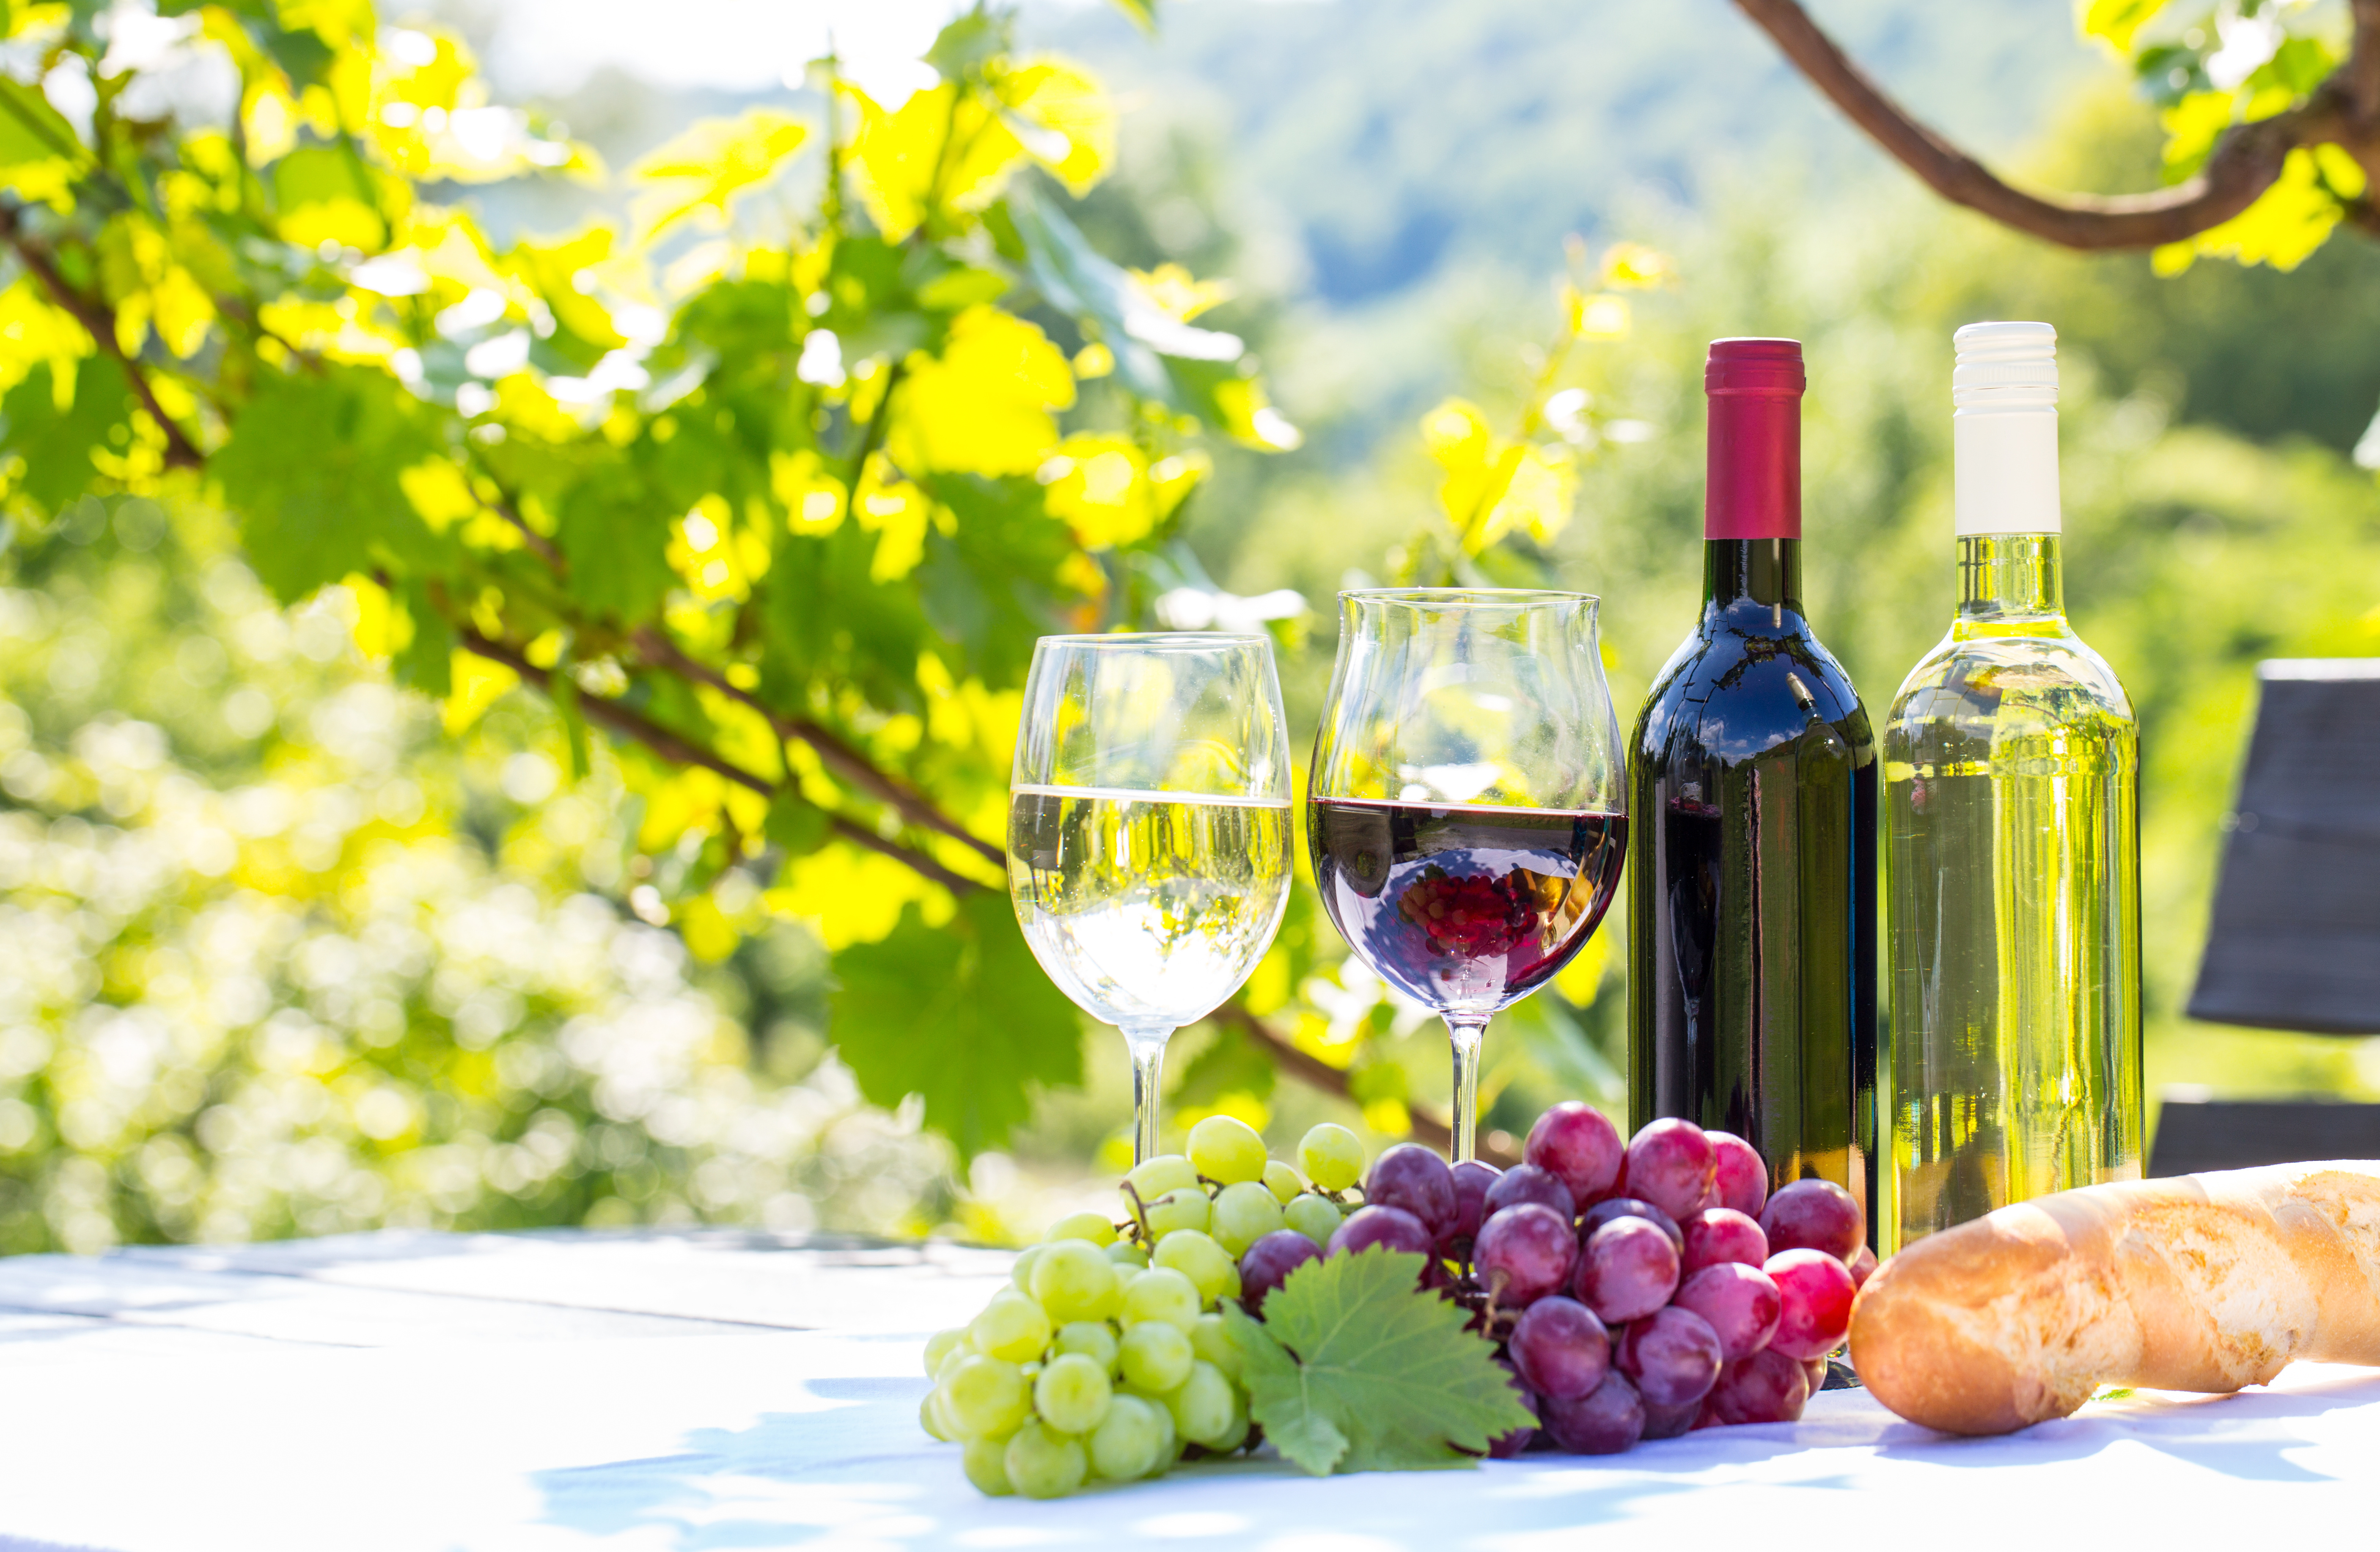 glass, food, wine, bottle, grapes, still life